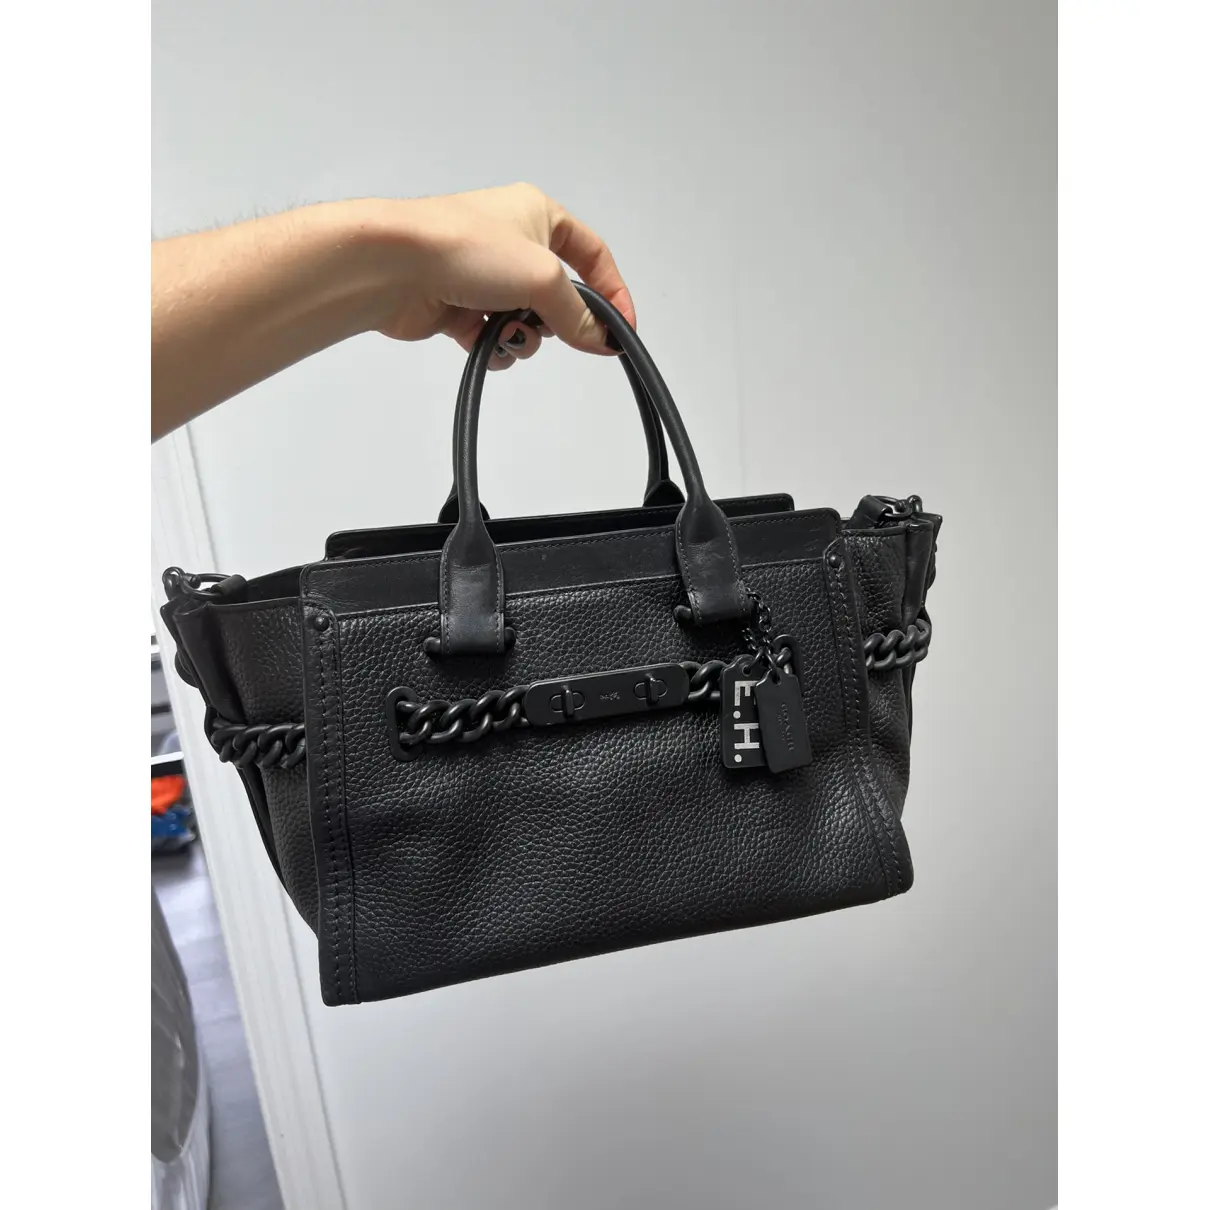 Luxury Coach Handbags Women